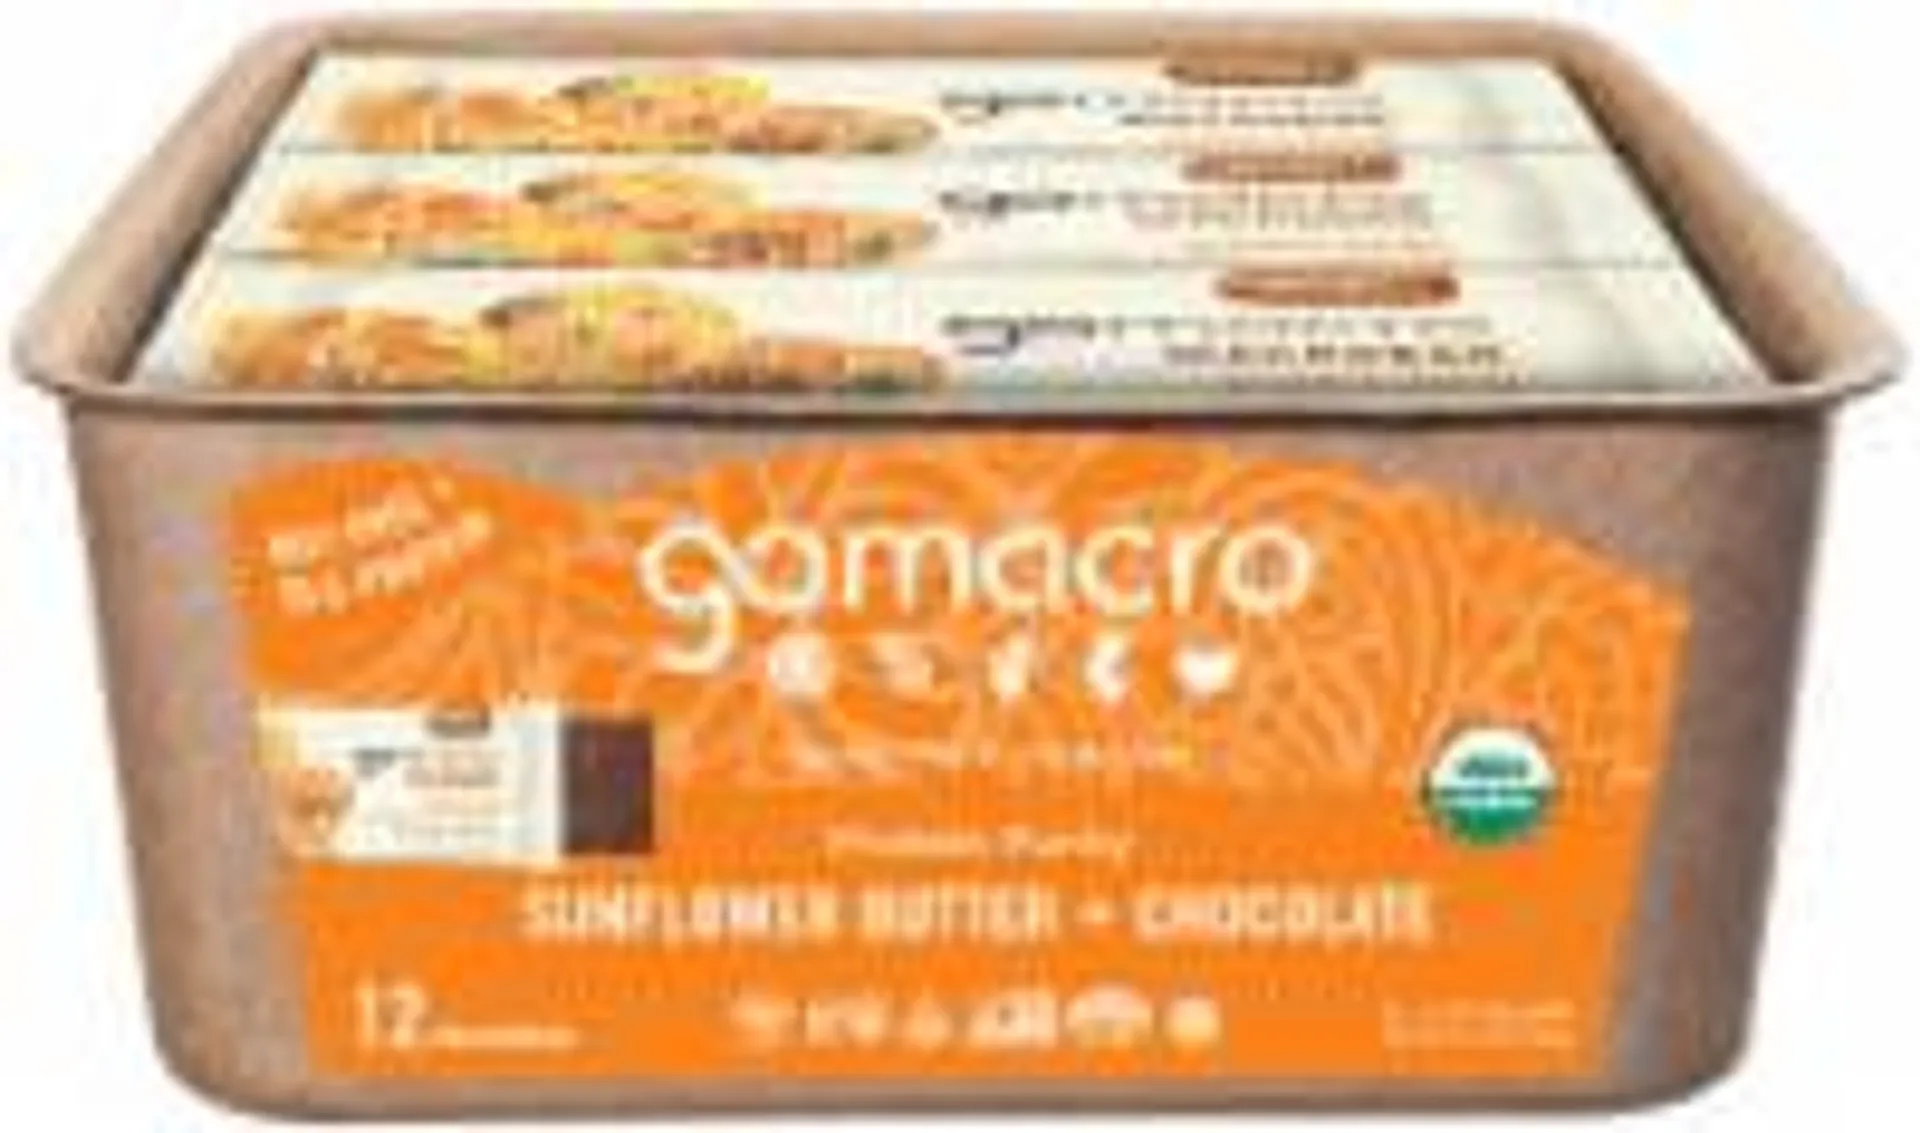 GoMacro® MacroBar Sunflower Butter & Chocolate Bars